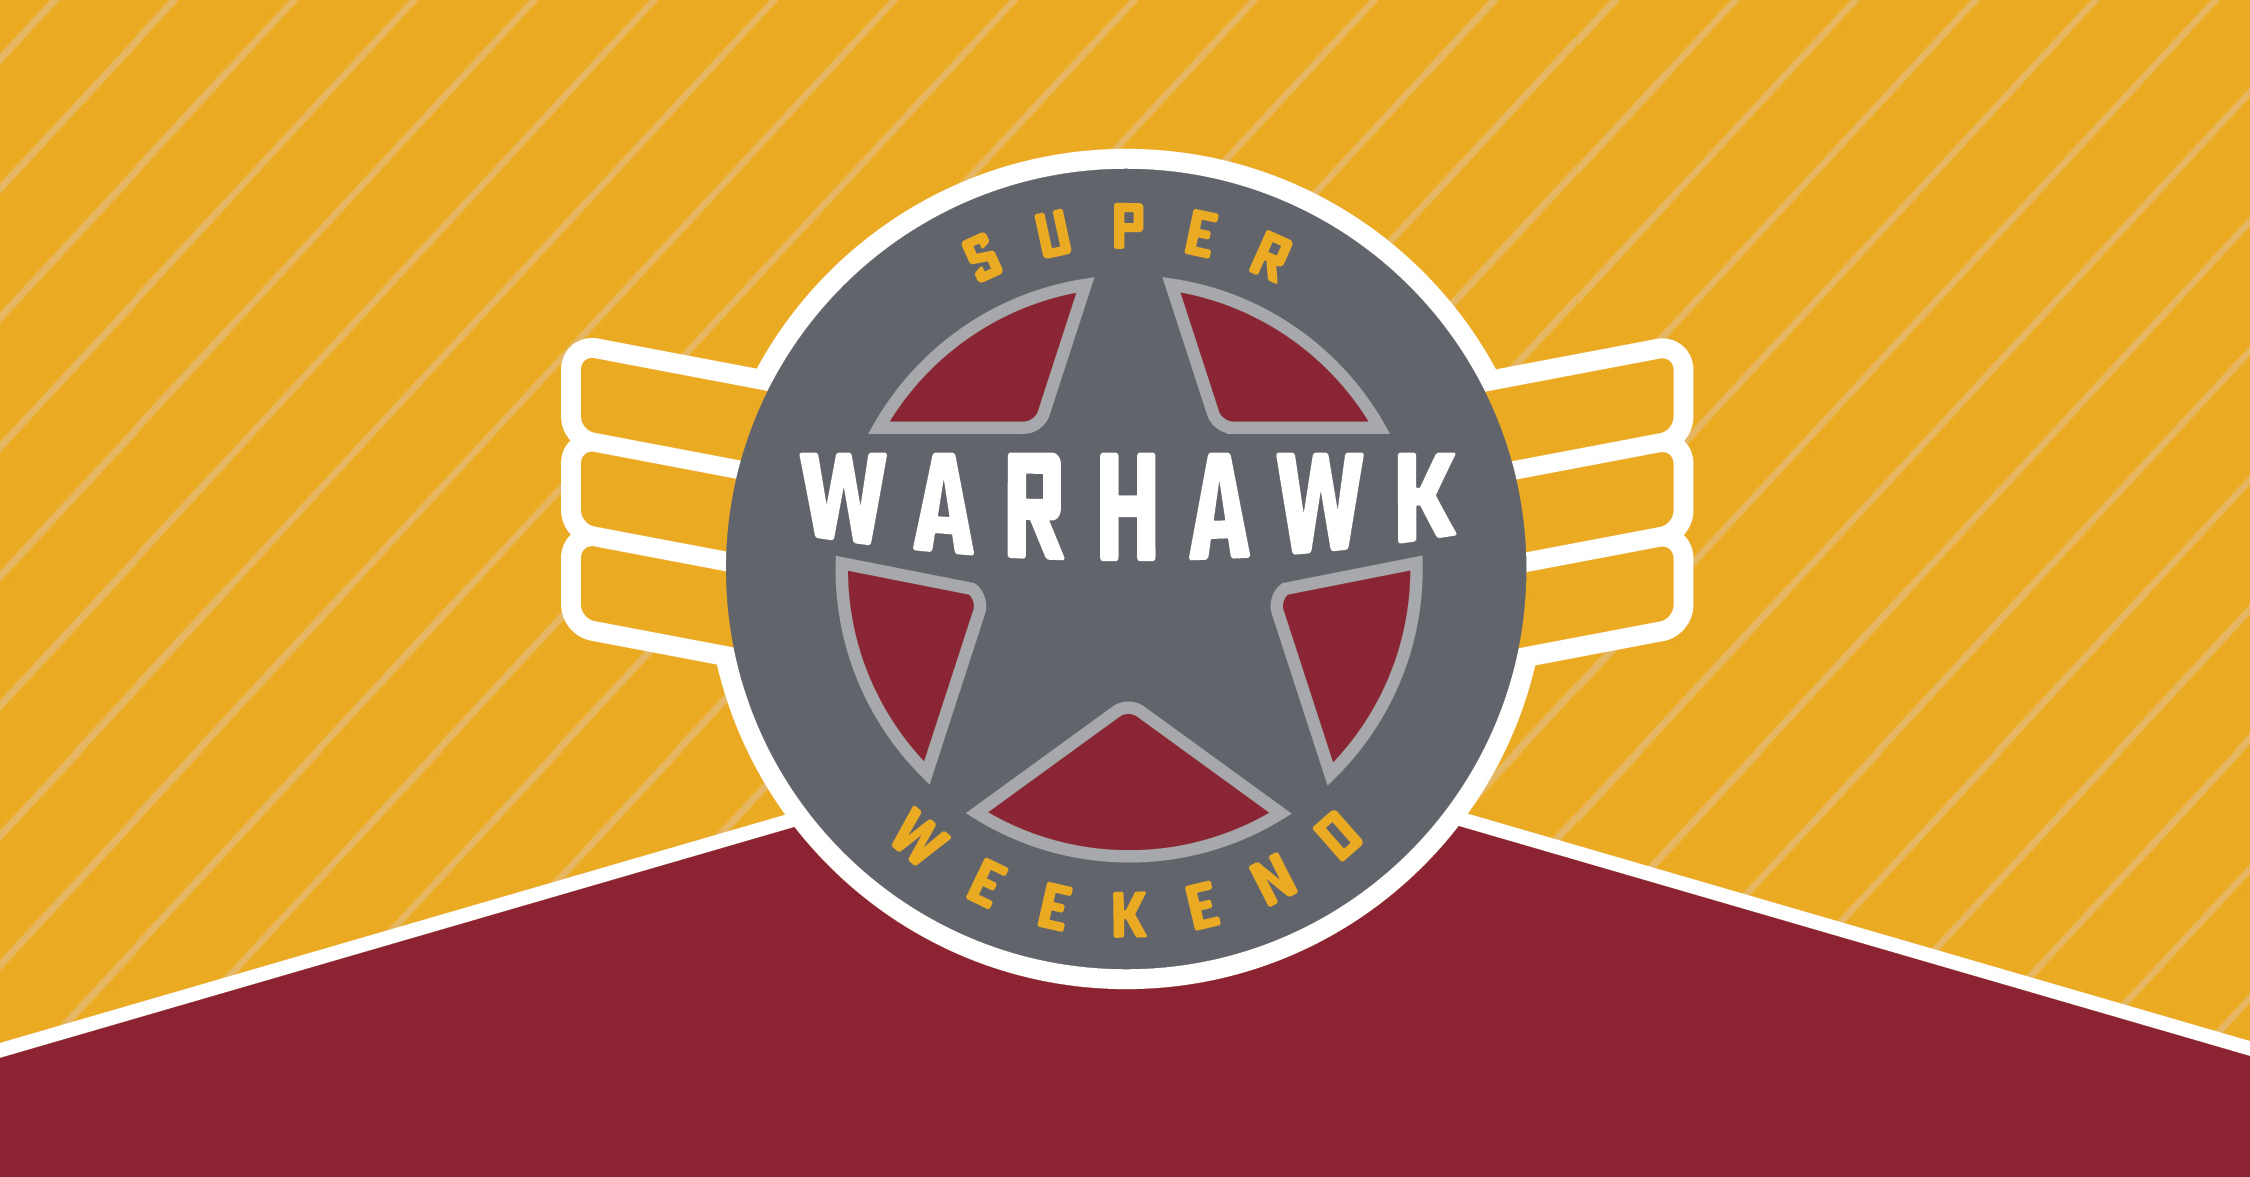 Super Warhawk